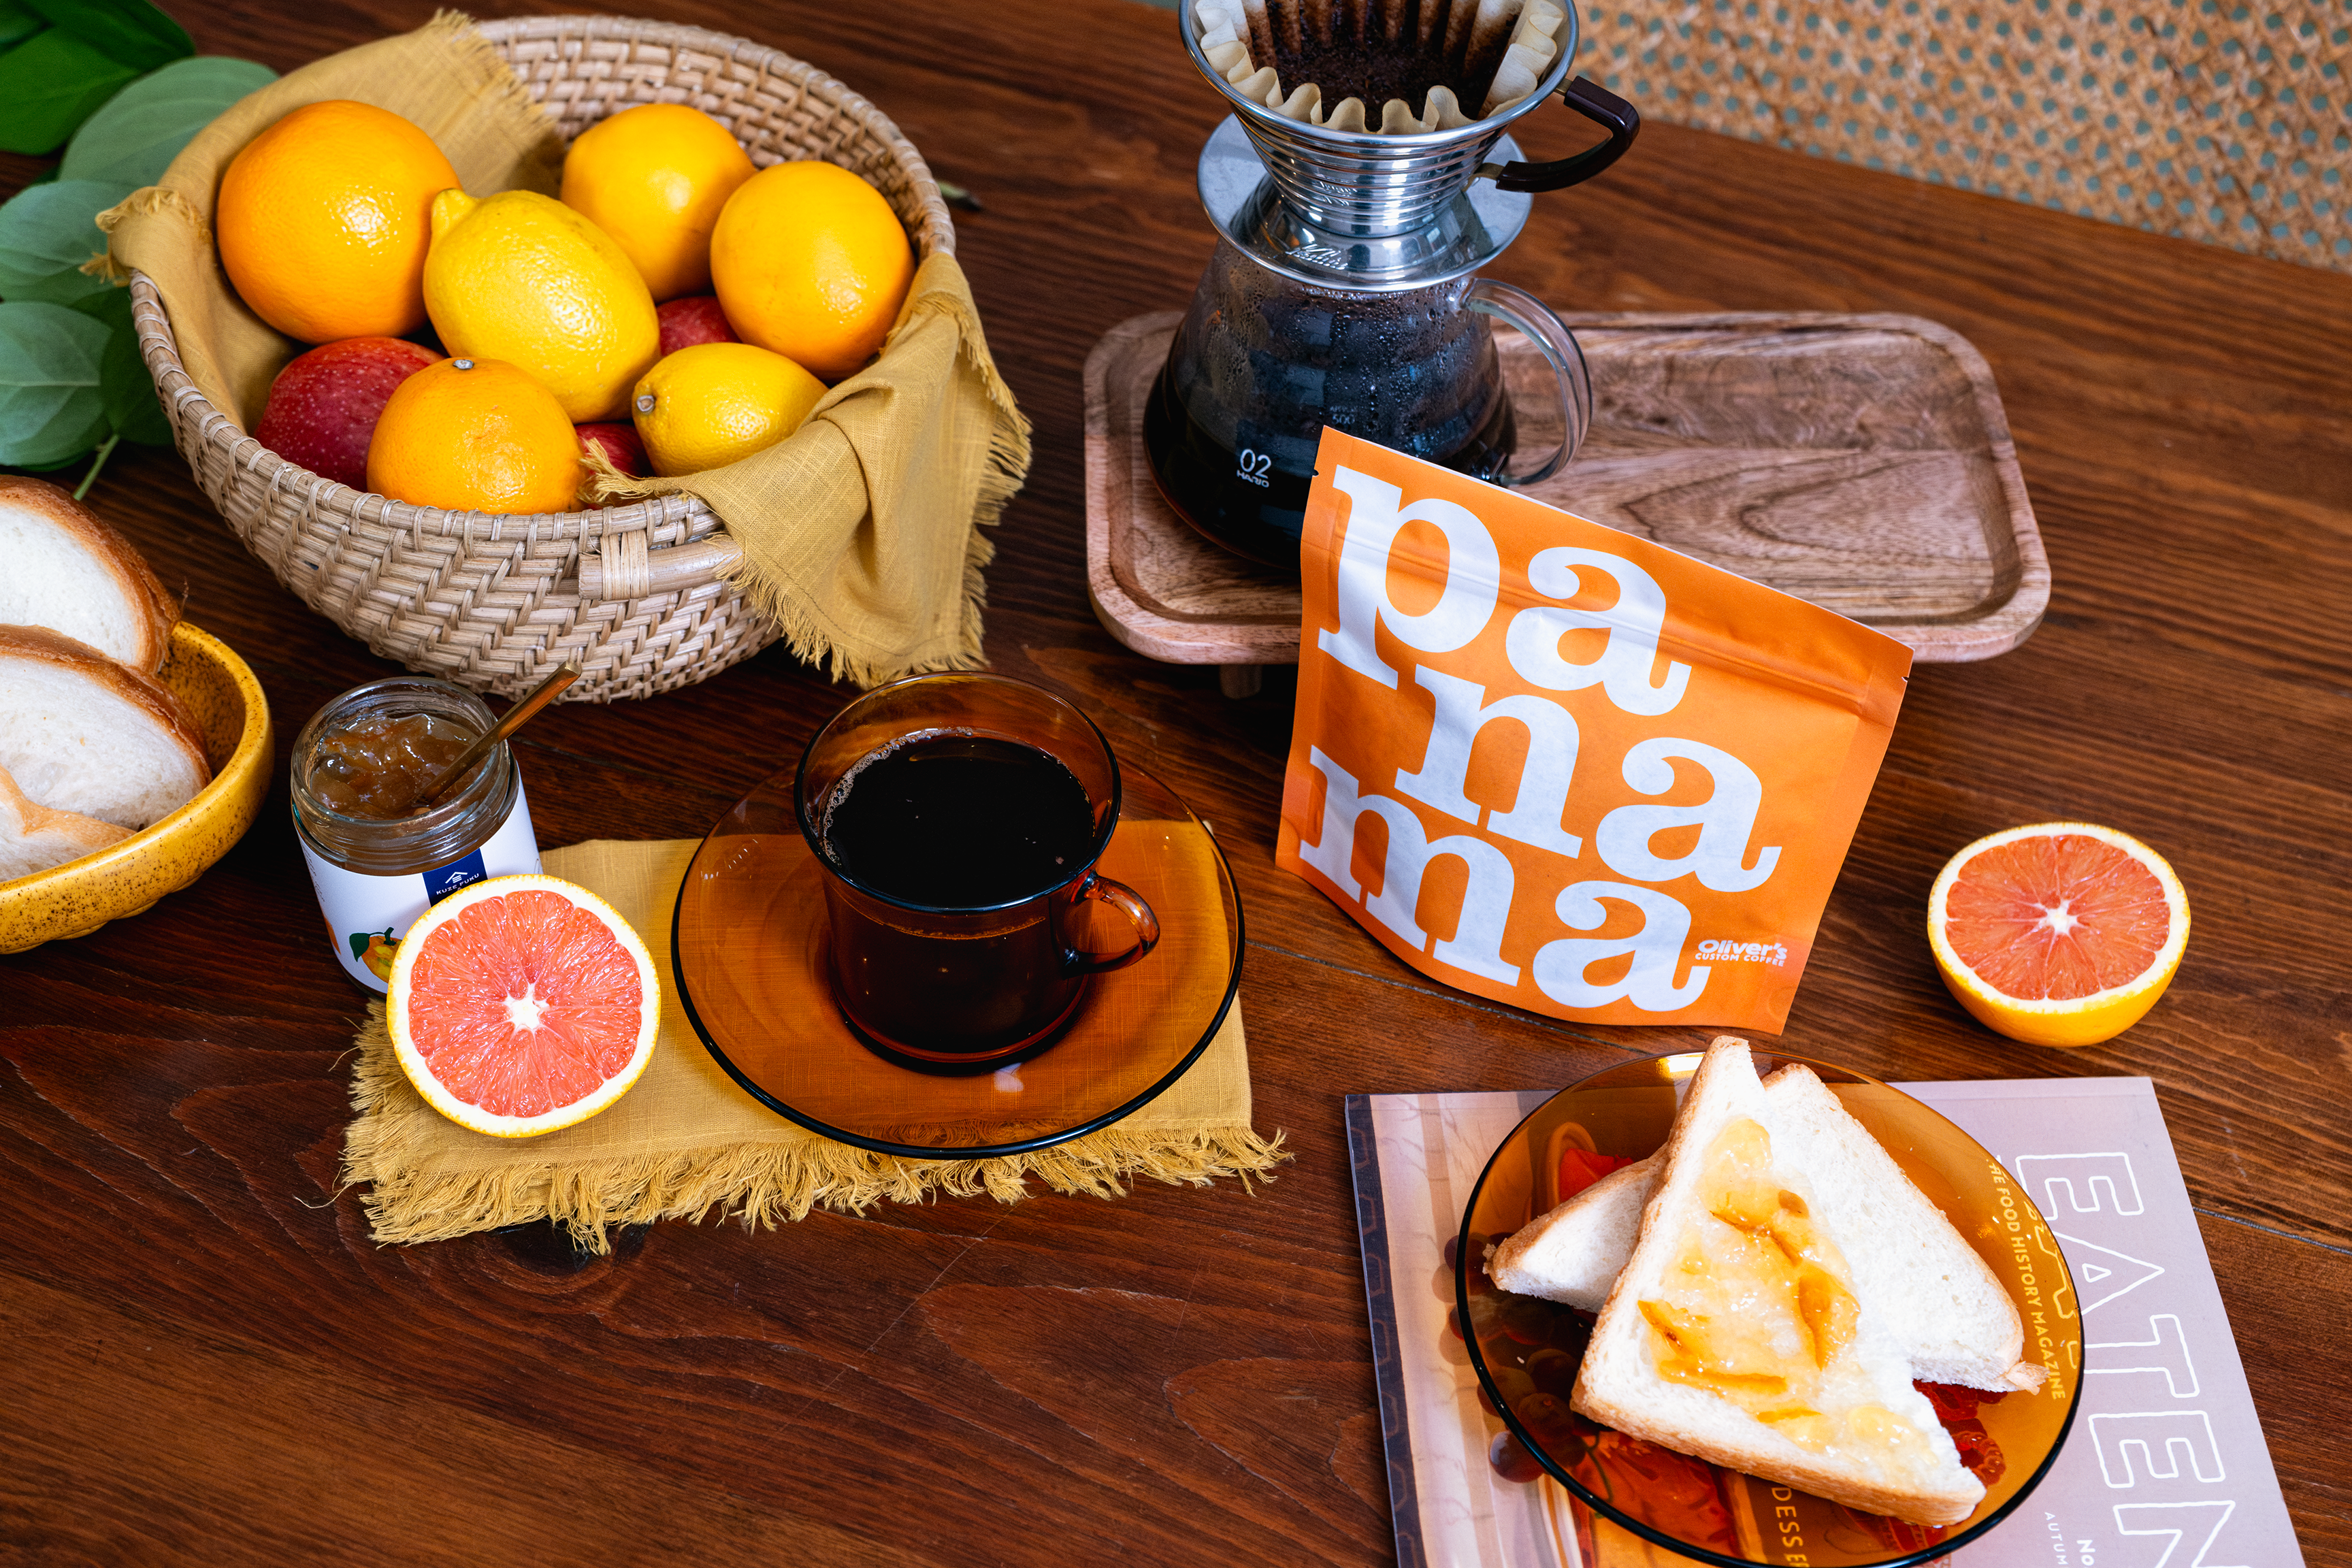 Panama coffee and breakfast